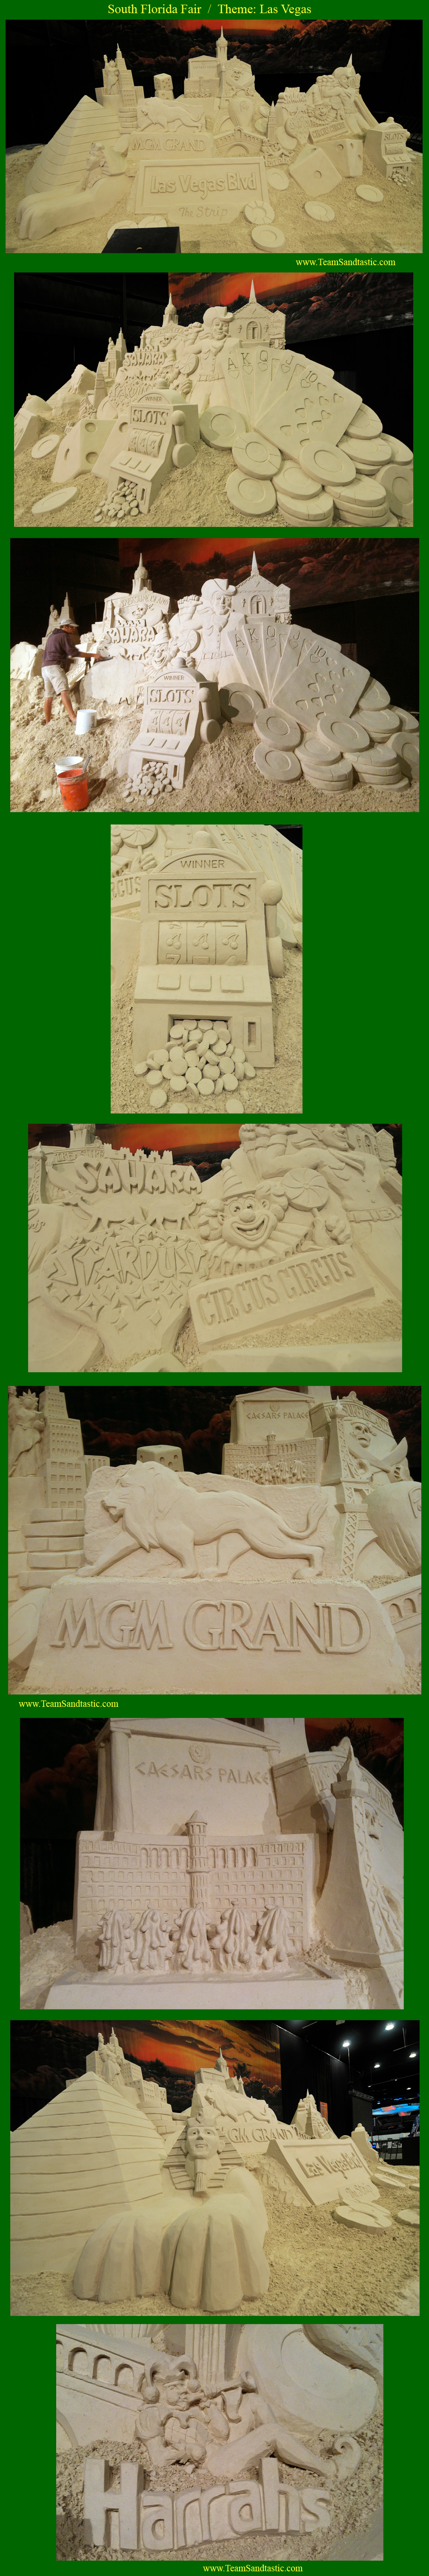 Las-Vegas-Sand-Sculpture